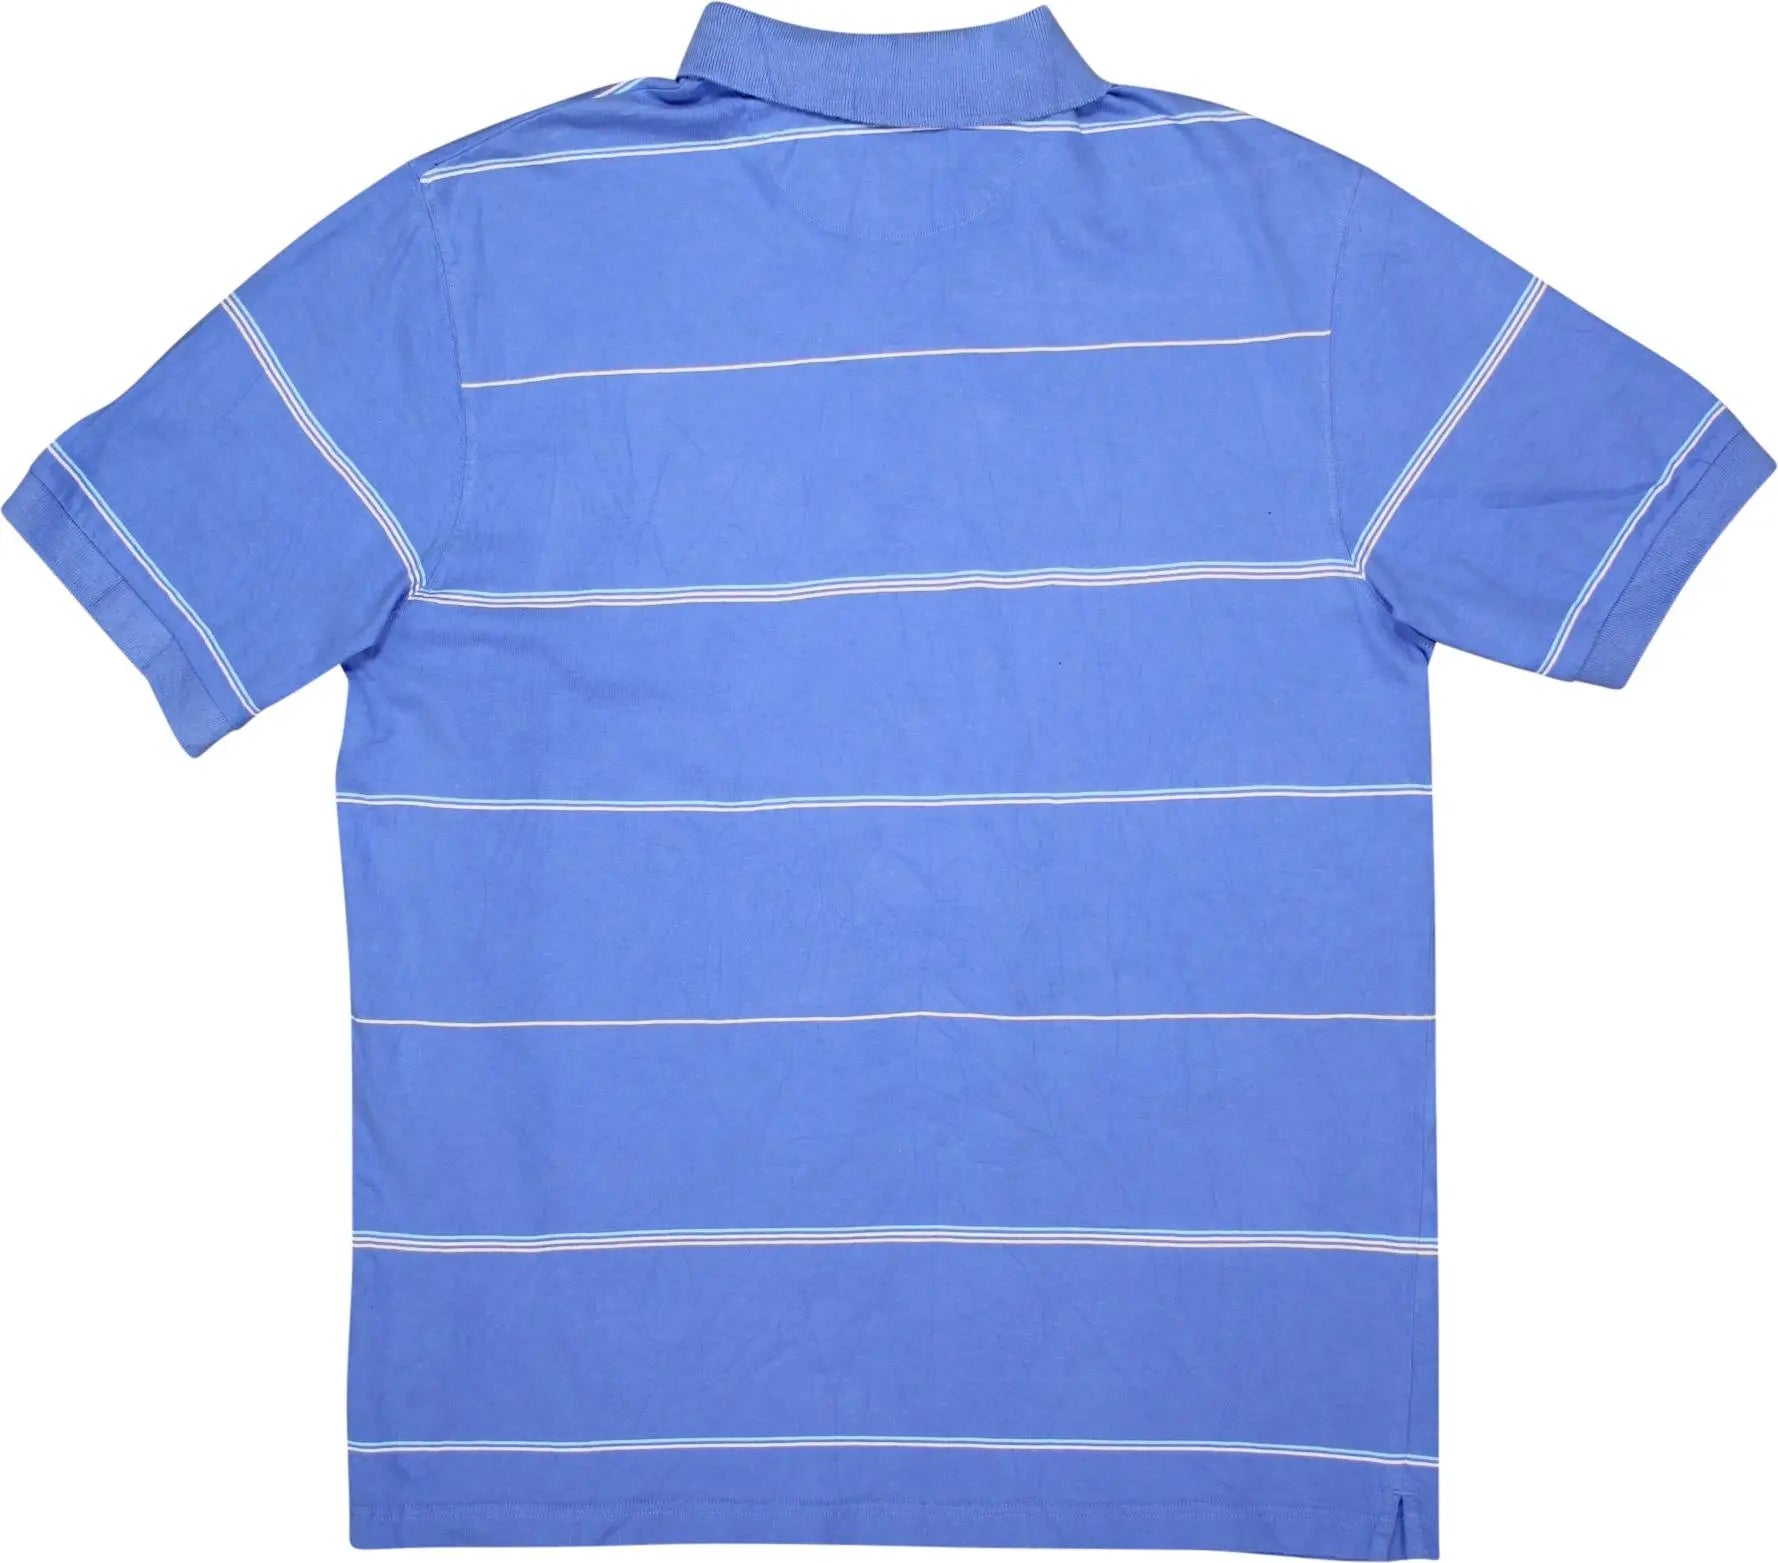 Chaps Ralph Lauren - Blue Polo Shirt by Chaps Ralph Lauren- ThriftTale.com - Vintage and second handclothing